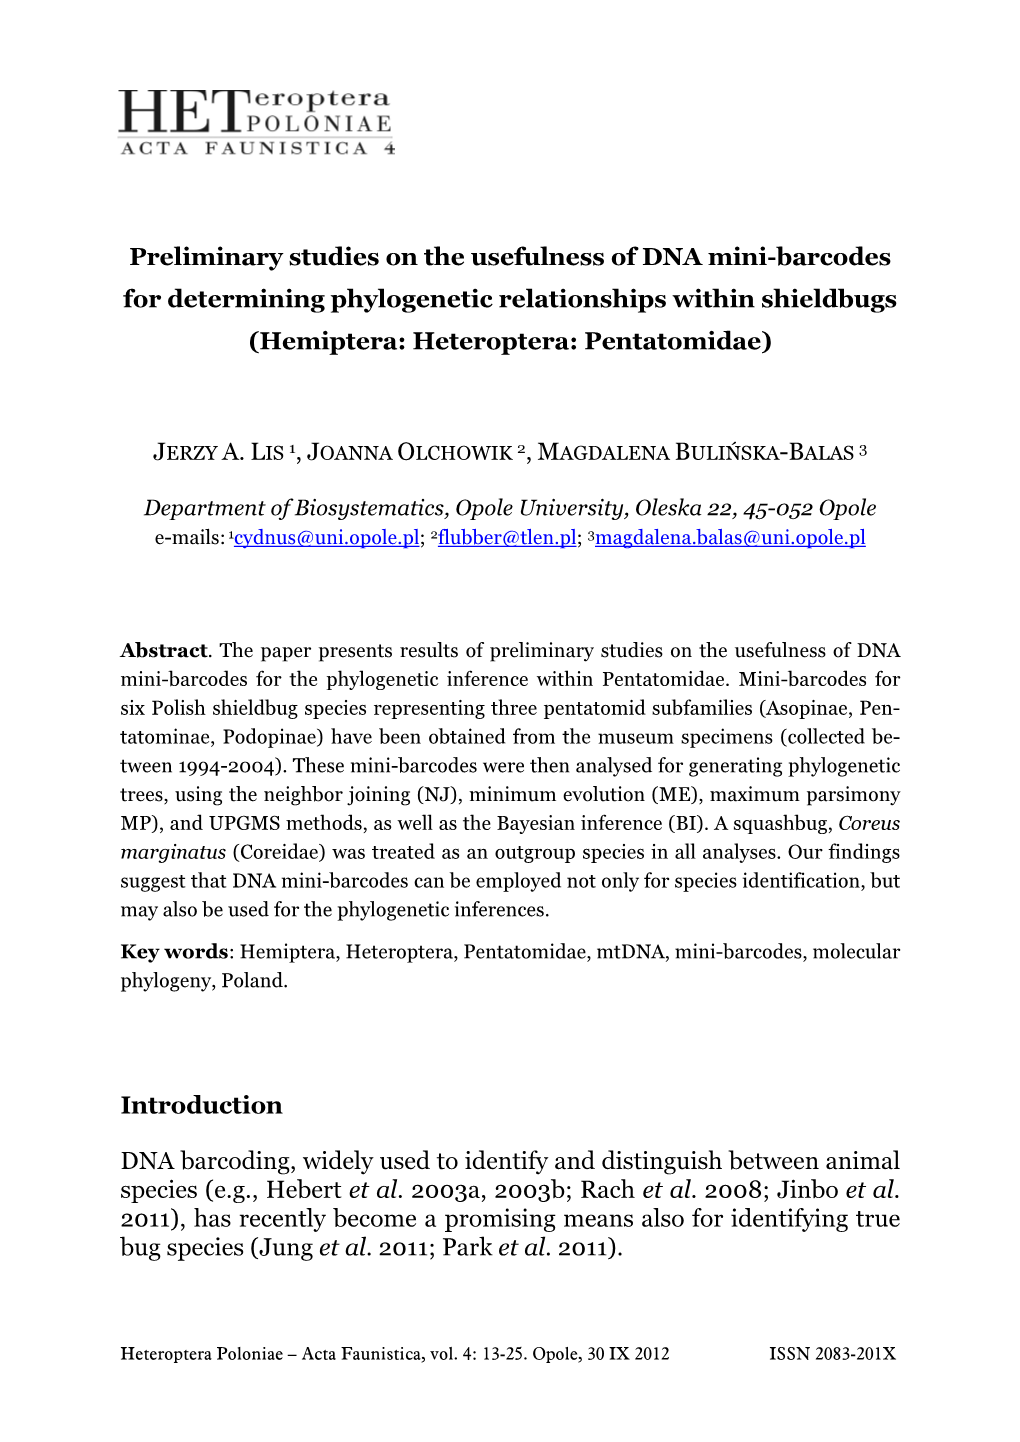 Preliminary Studies on the Usefulness of DNA Mini-Barcodes for Determining Phylogenetic Relationships Within Shieldbugs (Hemiptera: Heteroptera: Pentatomidae)